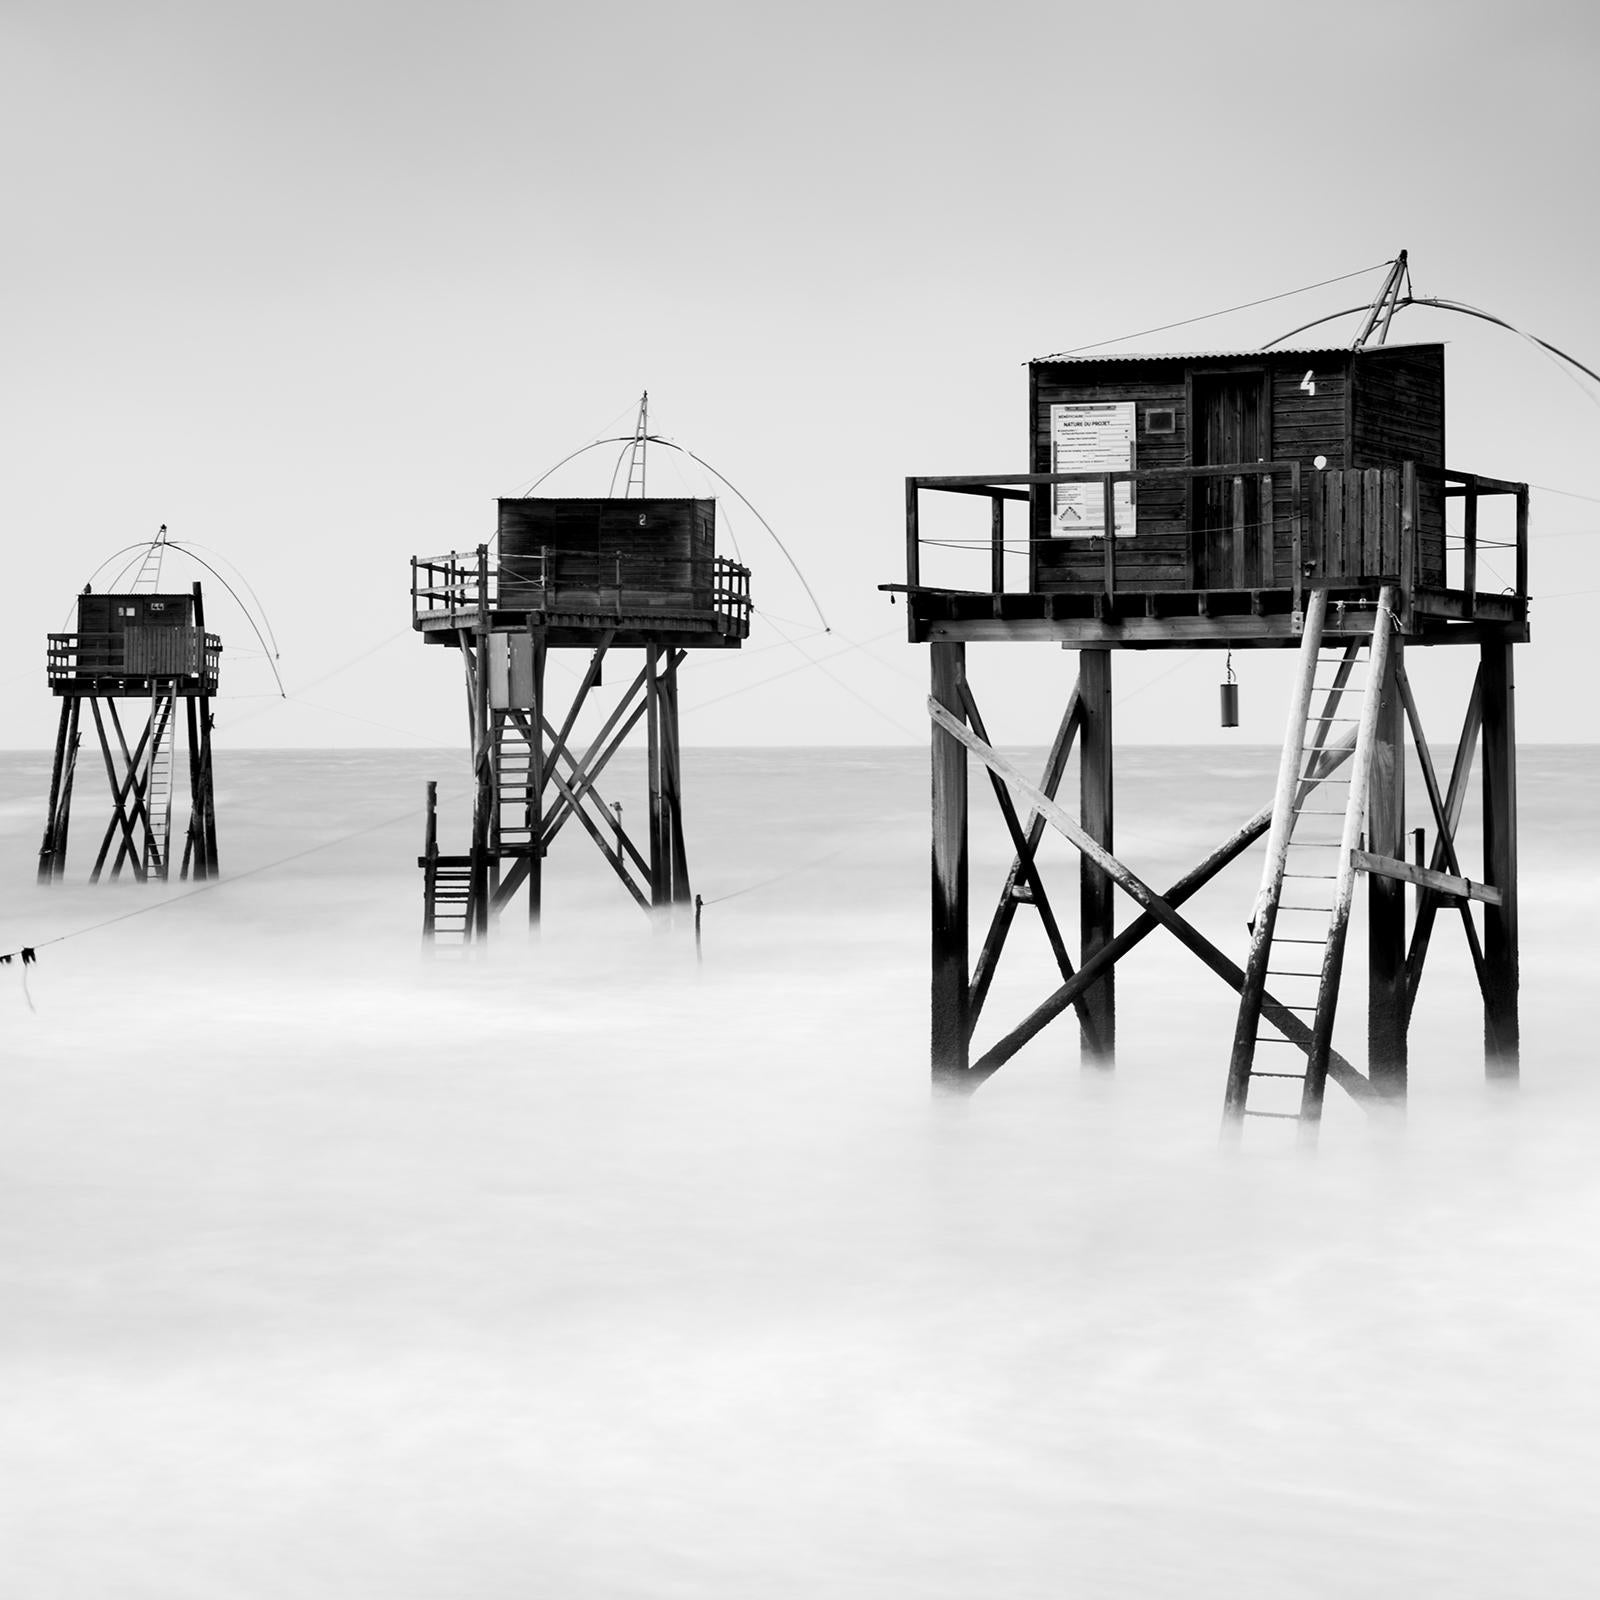 Fishing Hut on Stilts, atlantic coast, France, black and white landscape photo For Sale 4